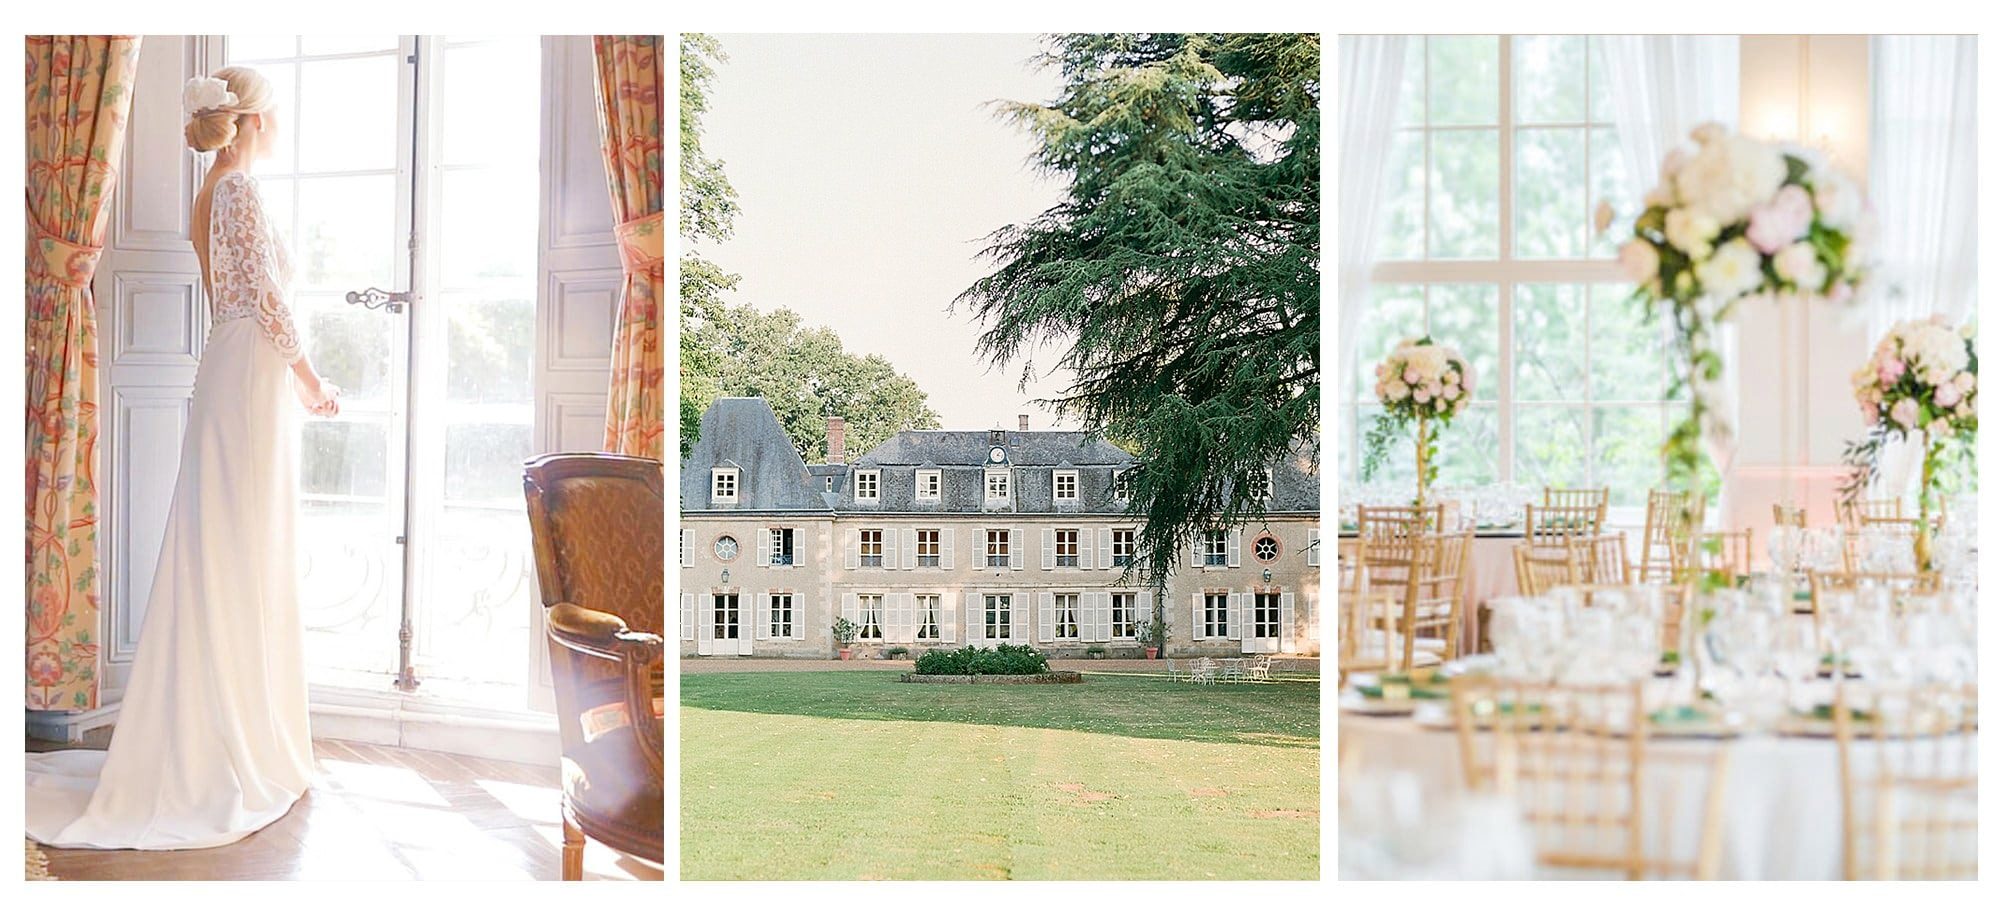 Château de Bouthonvilliers - Vidéaste mariage France - Wedding videographer French